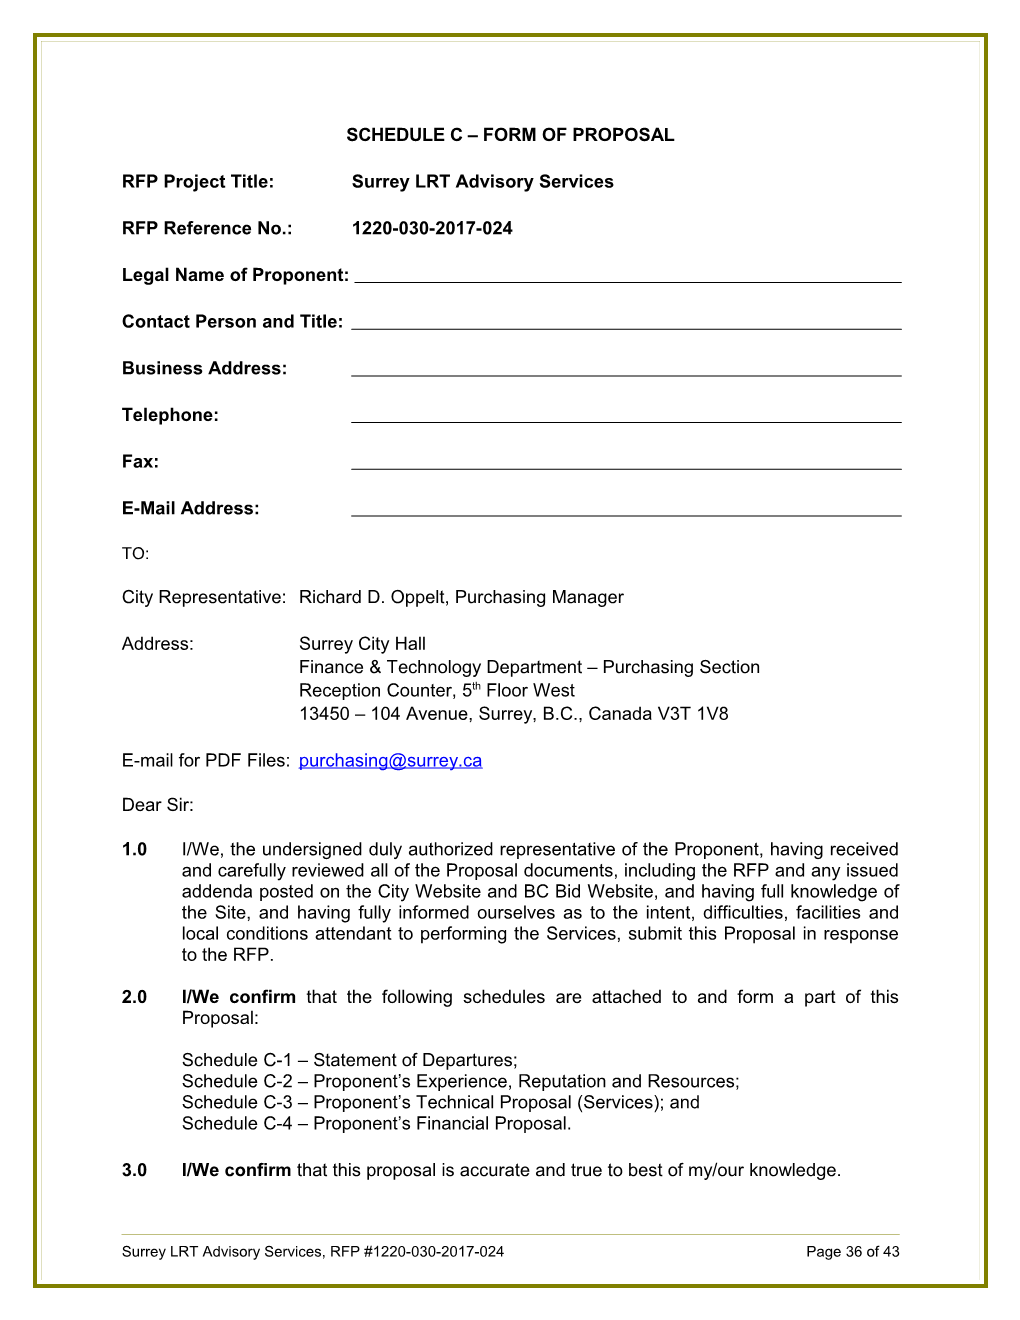 RFP Project Title:Surrey LRT Advisory Services